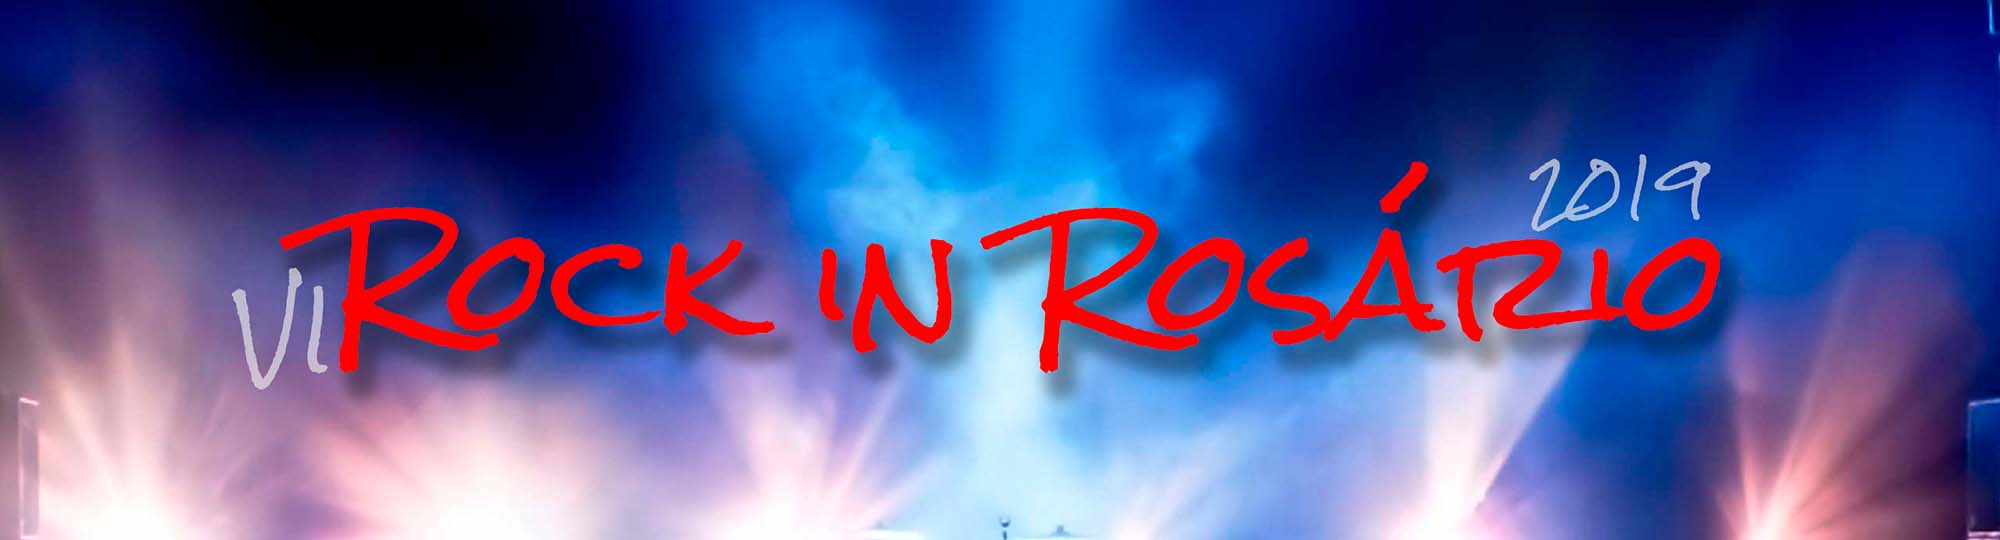 VI Rock in Rosário
